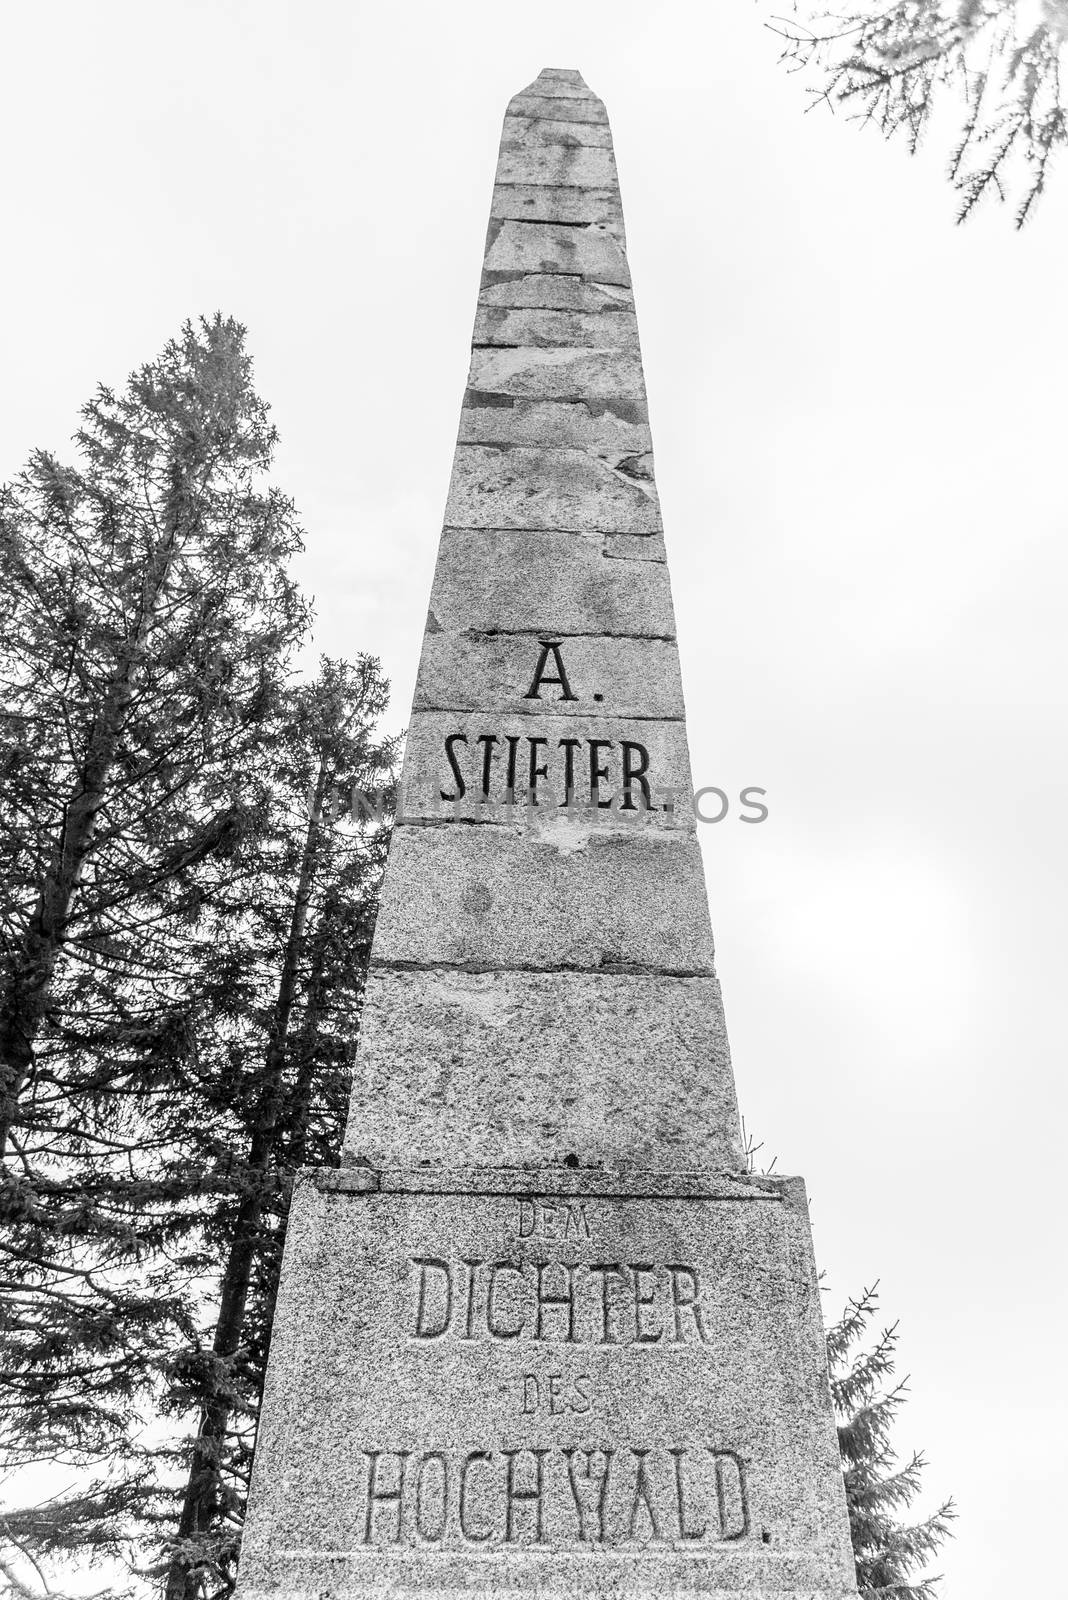 Stone monument of Adalbert Stifter - writer of Sumava Mounains - above Plechy Lake, Sumava National Park, Czech Republic. Black and white image.